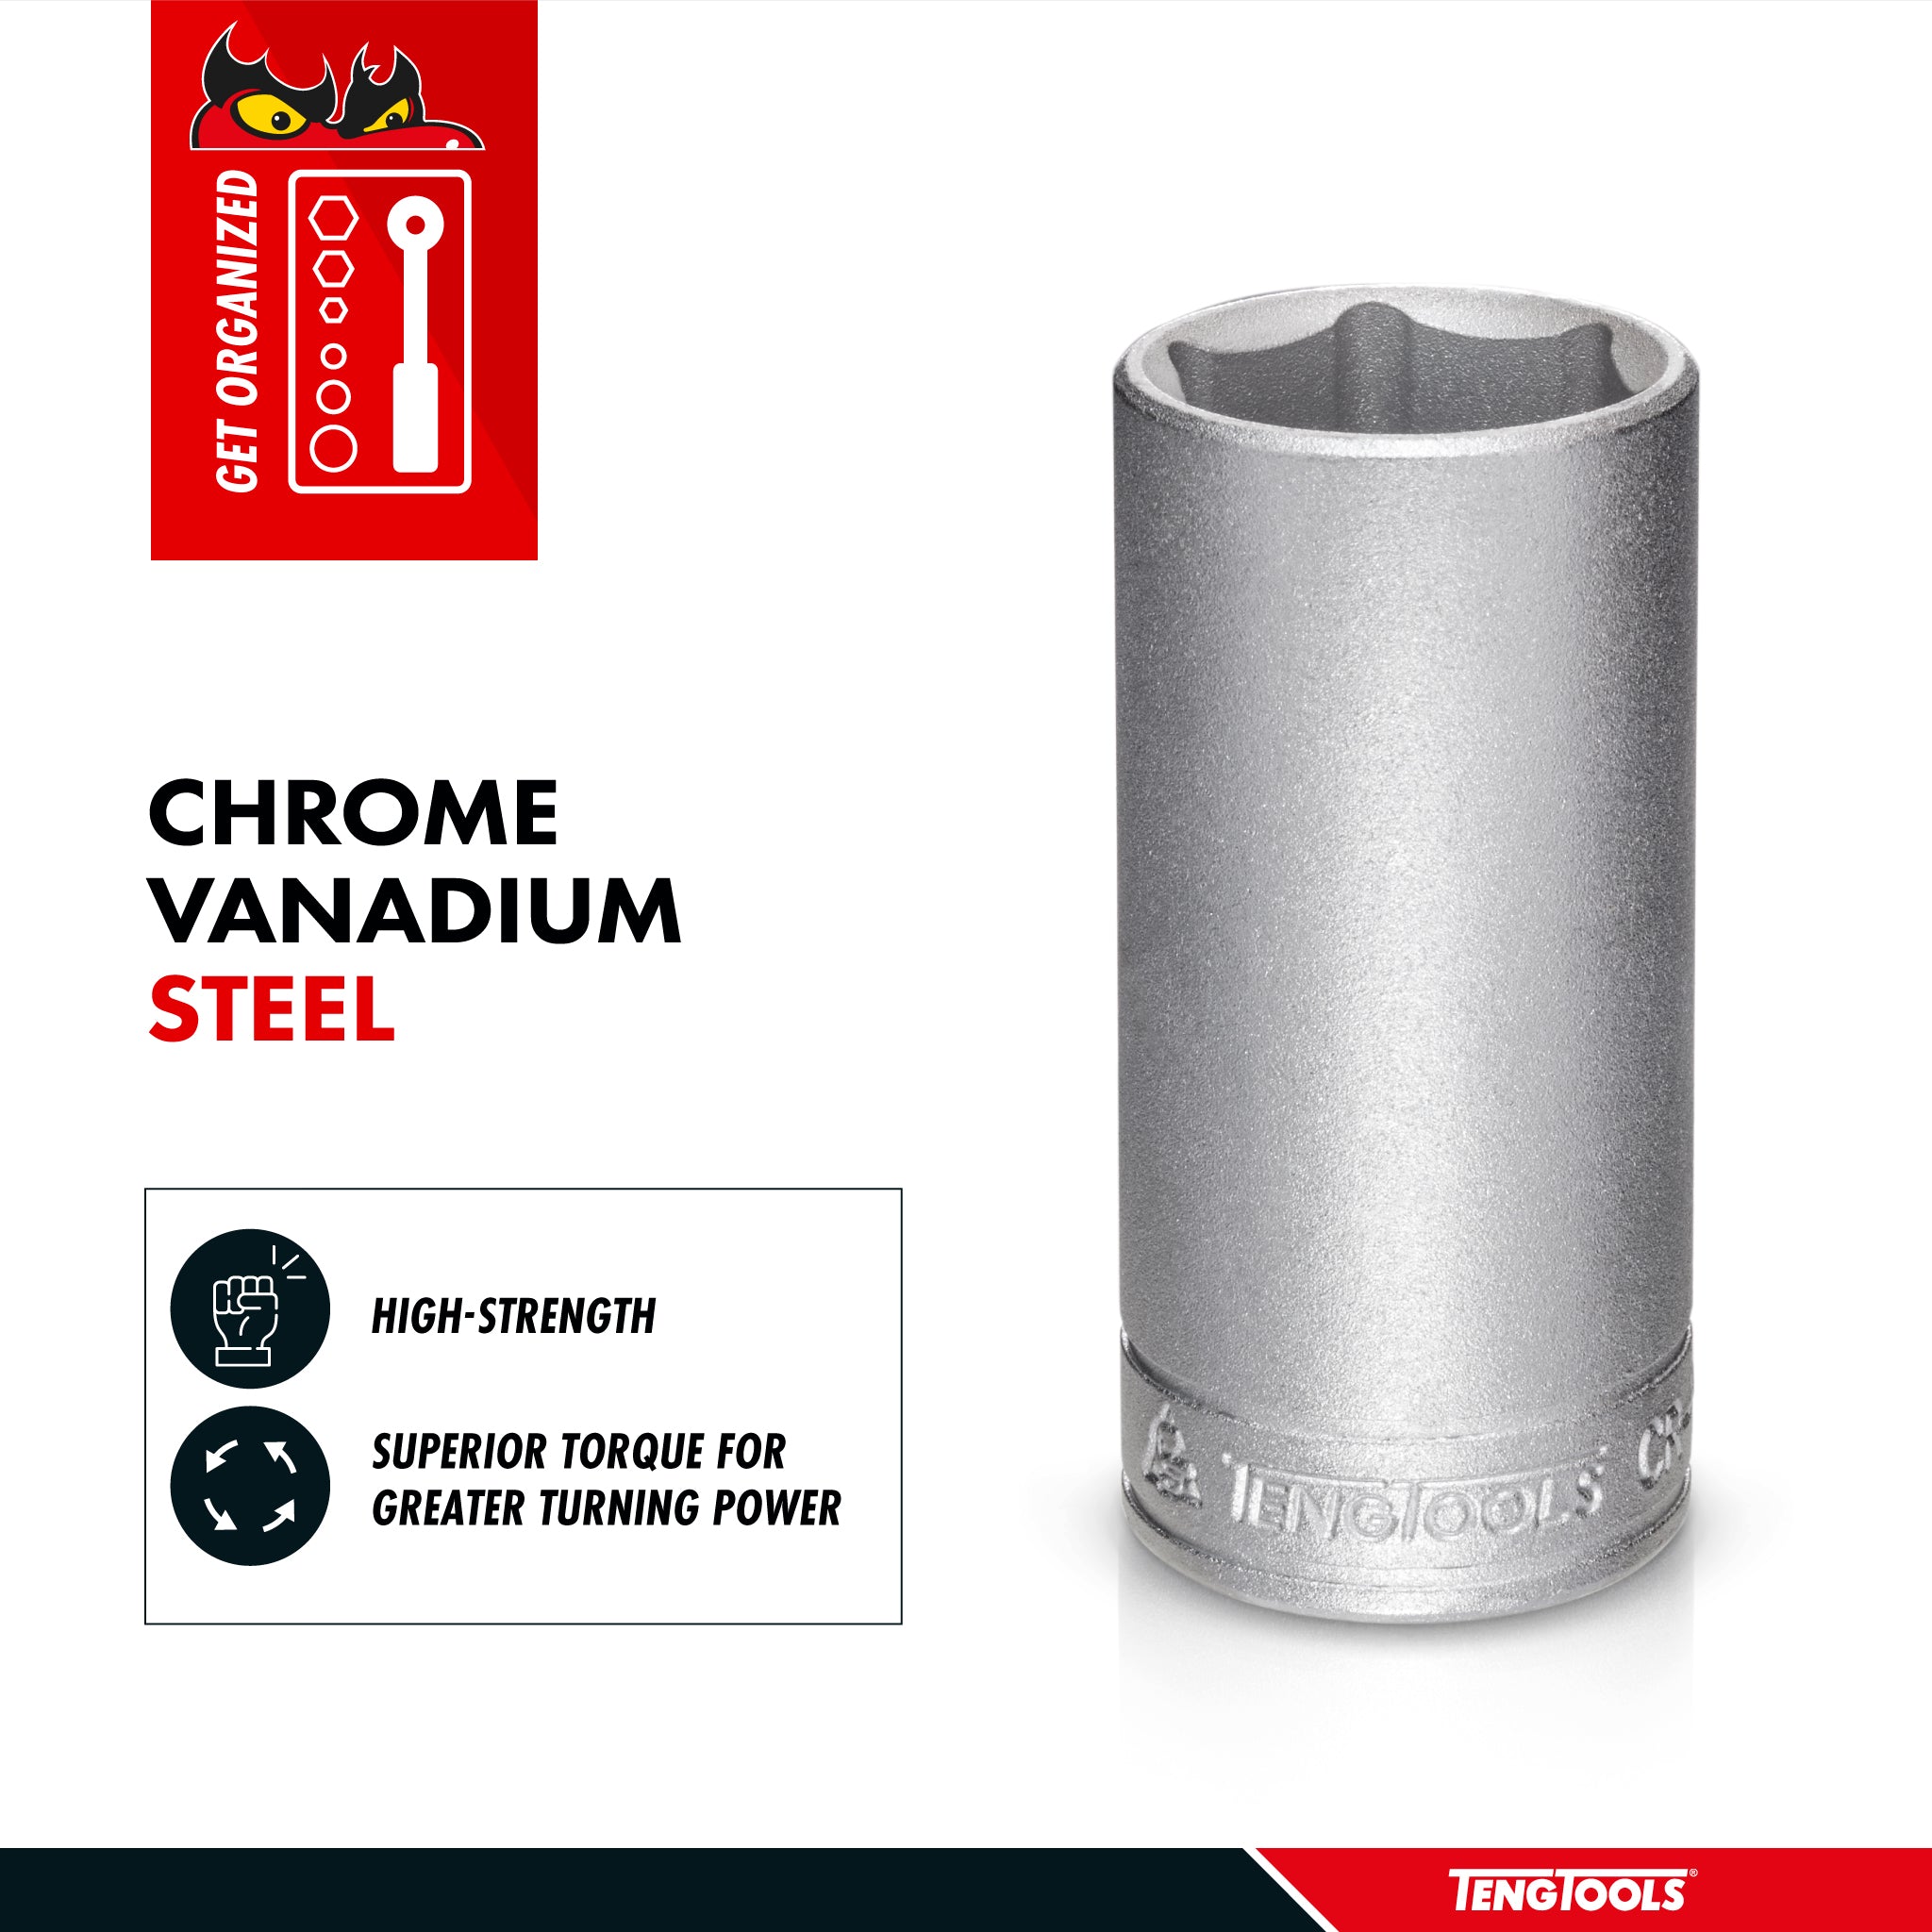 Teng Tools 1/4 Inch Drive 6 Point Metric Deep Chrome Vanadium Sockets - 12mm